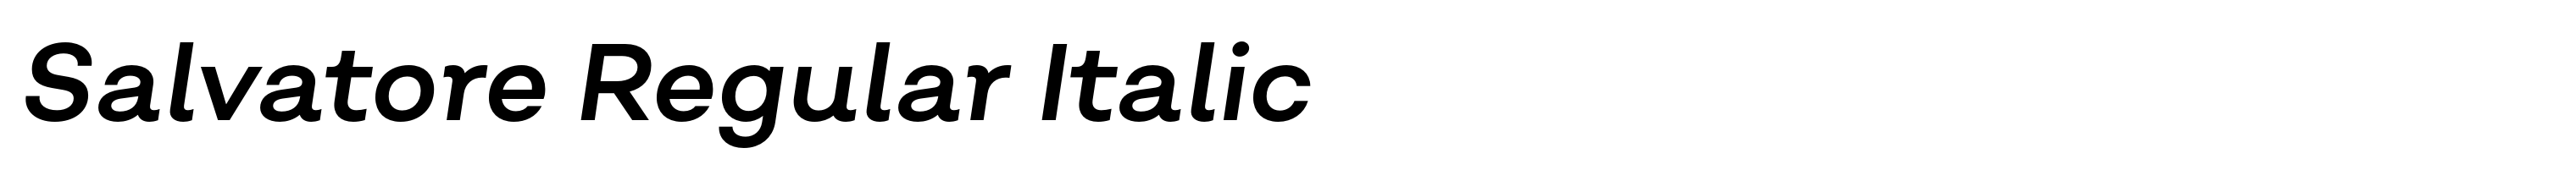 Salvatore Regular Italic